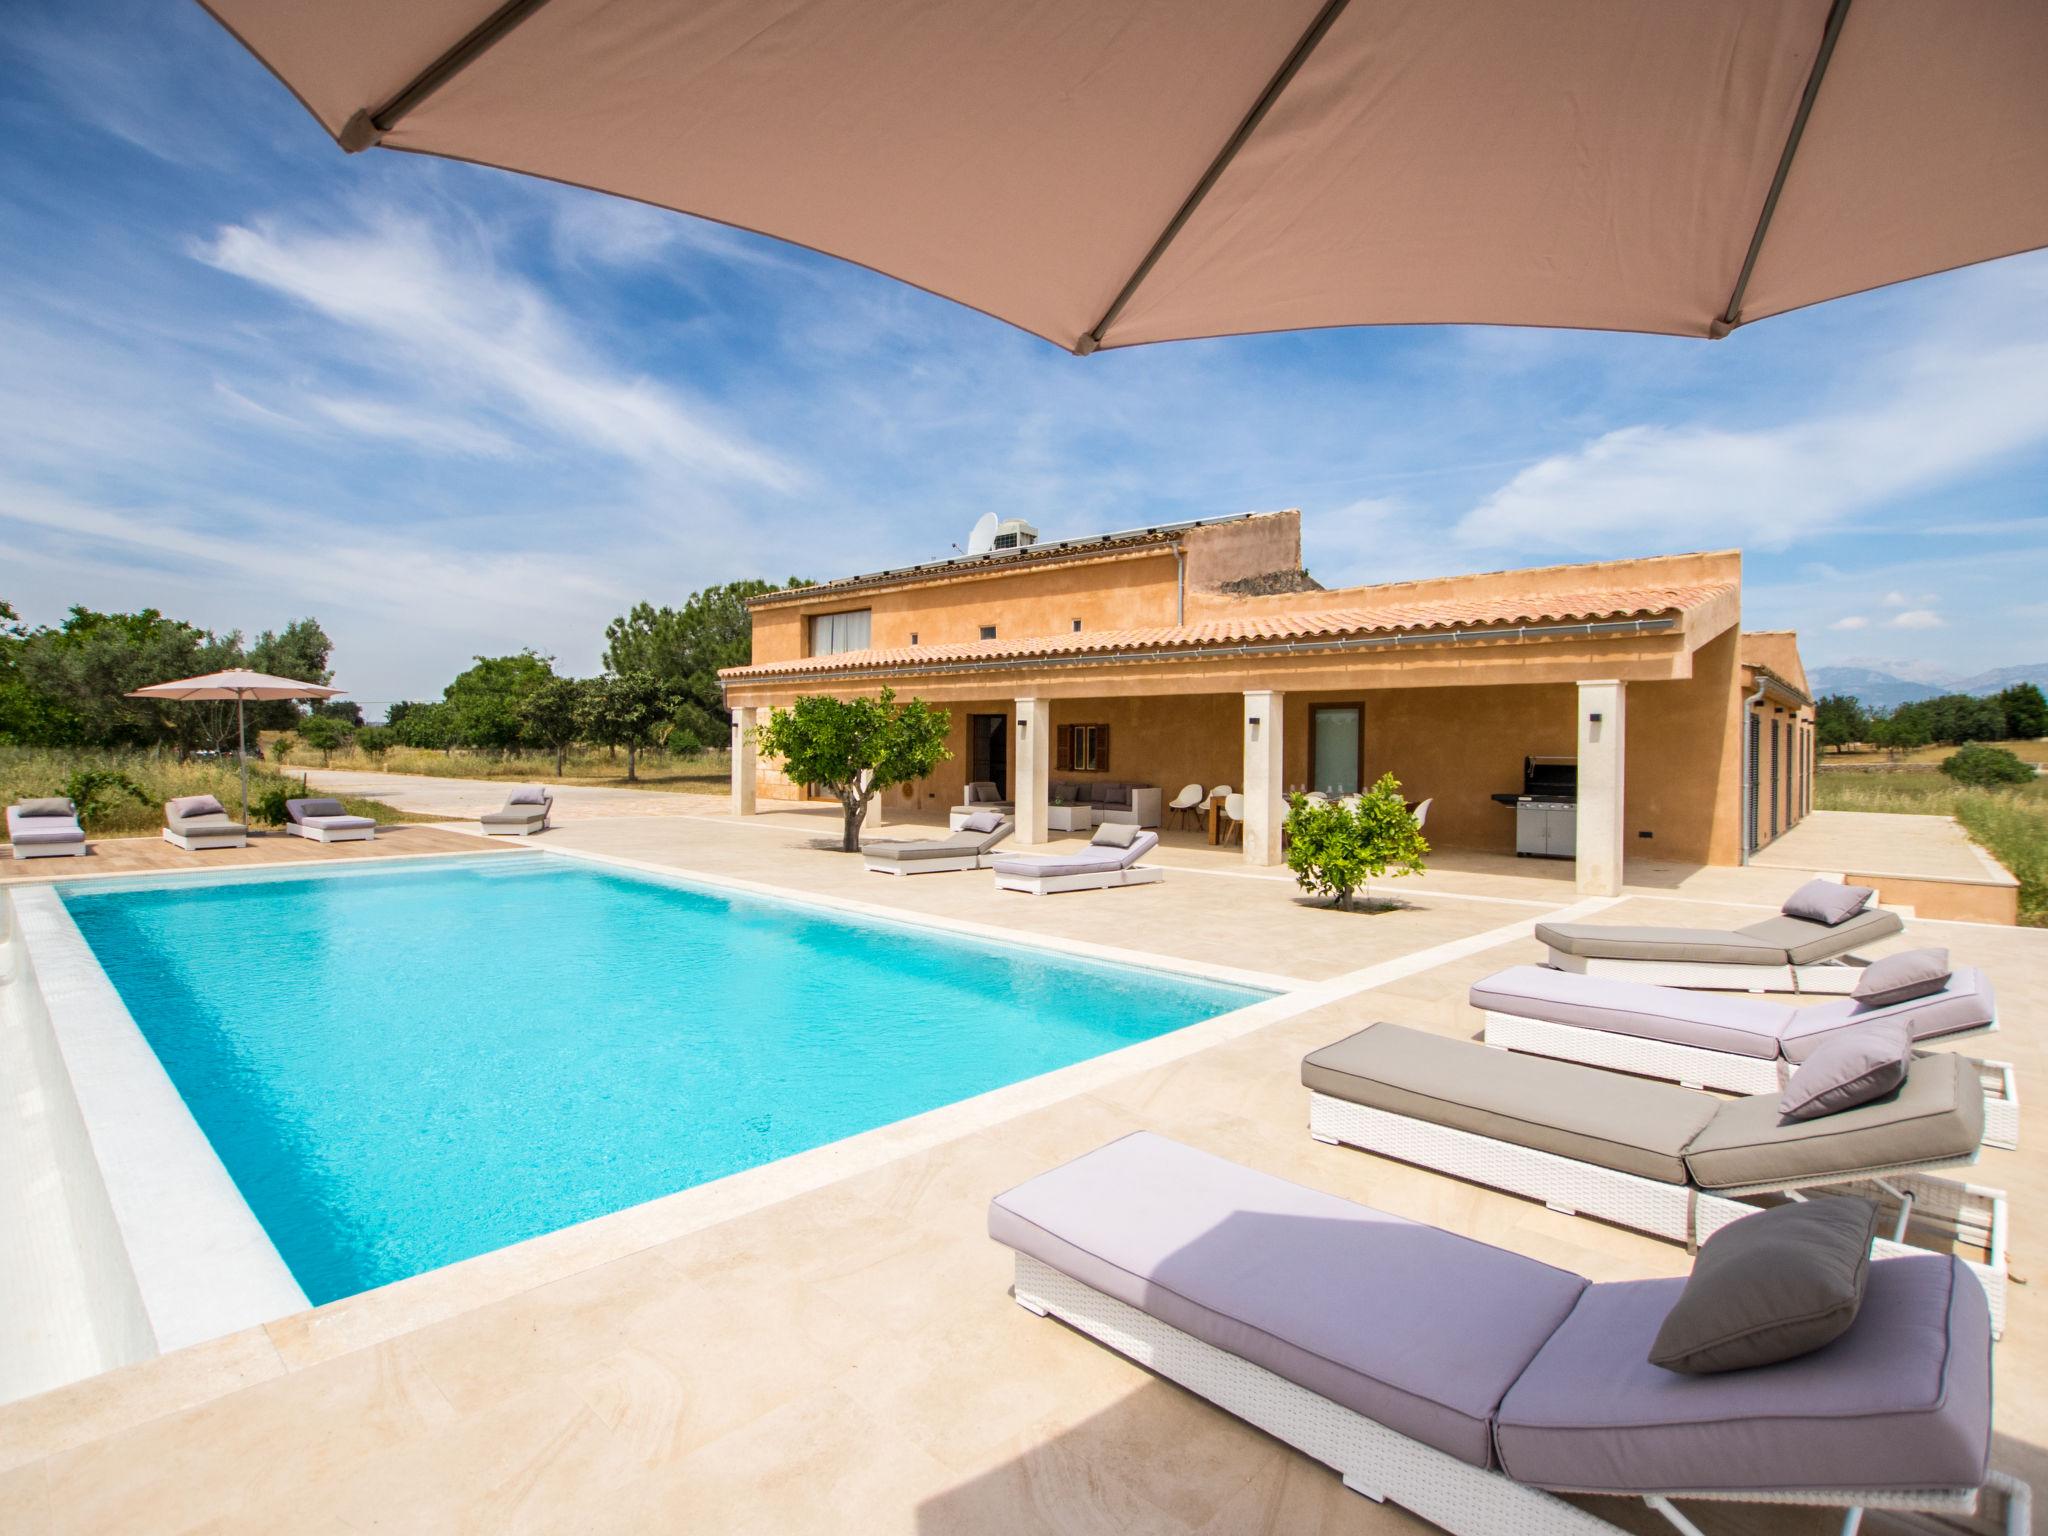 Foto 1 - Casa con 6 camere da letto a Sencelles con piscina privata e giardino